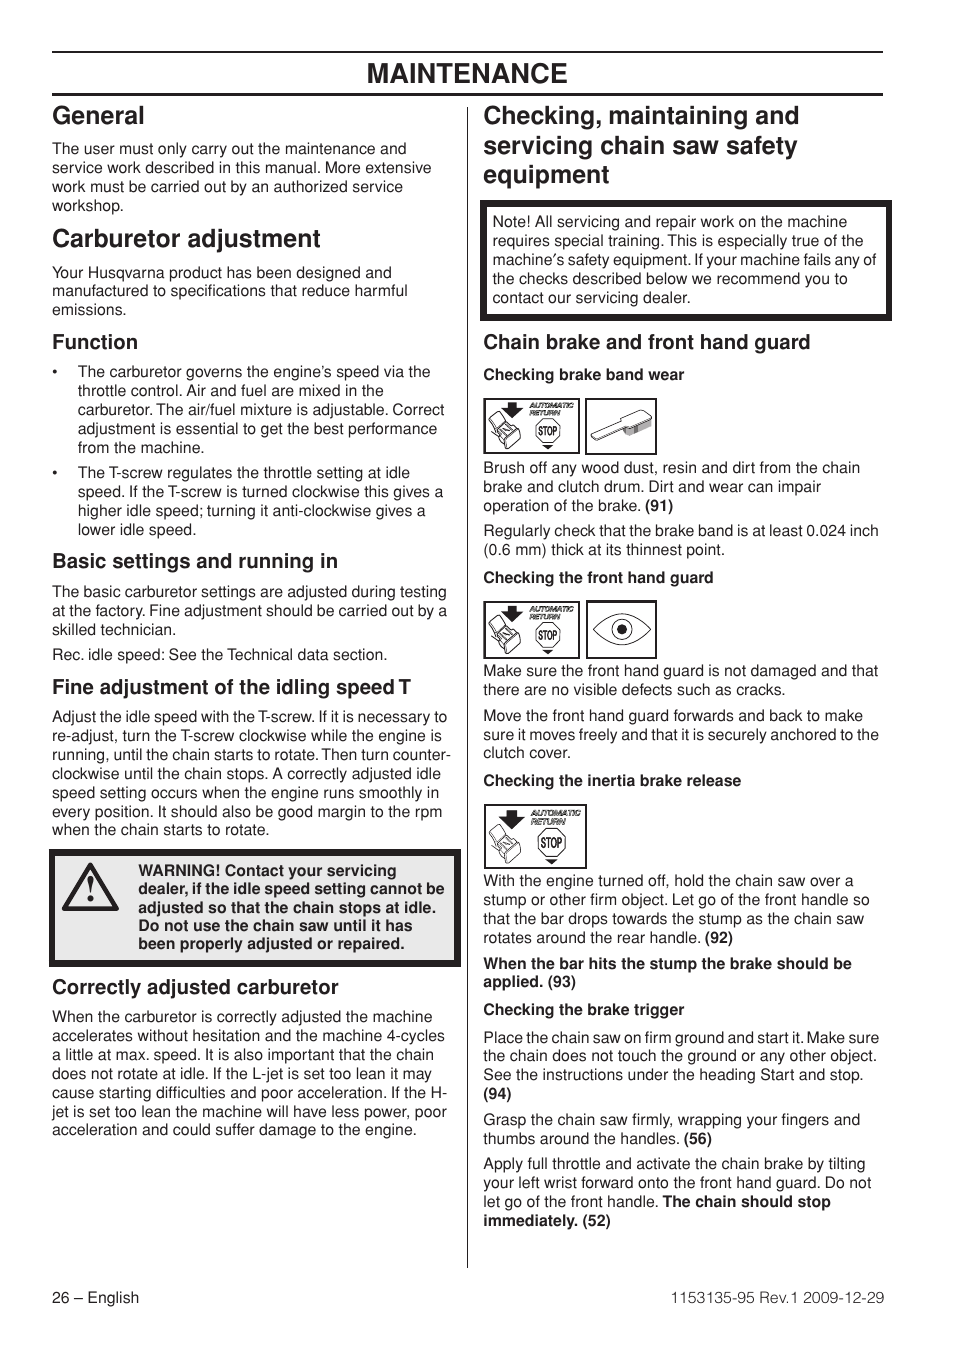 General, Carburetor adjustment, Function | Husqvarna 435 User Manual | Page  26 / 36 | Original mode